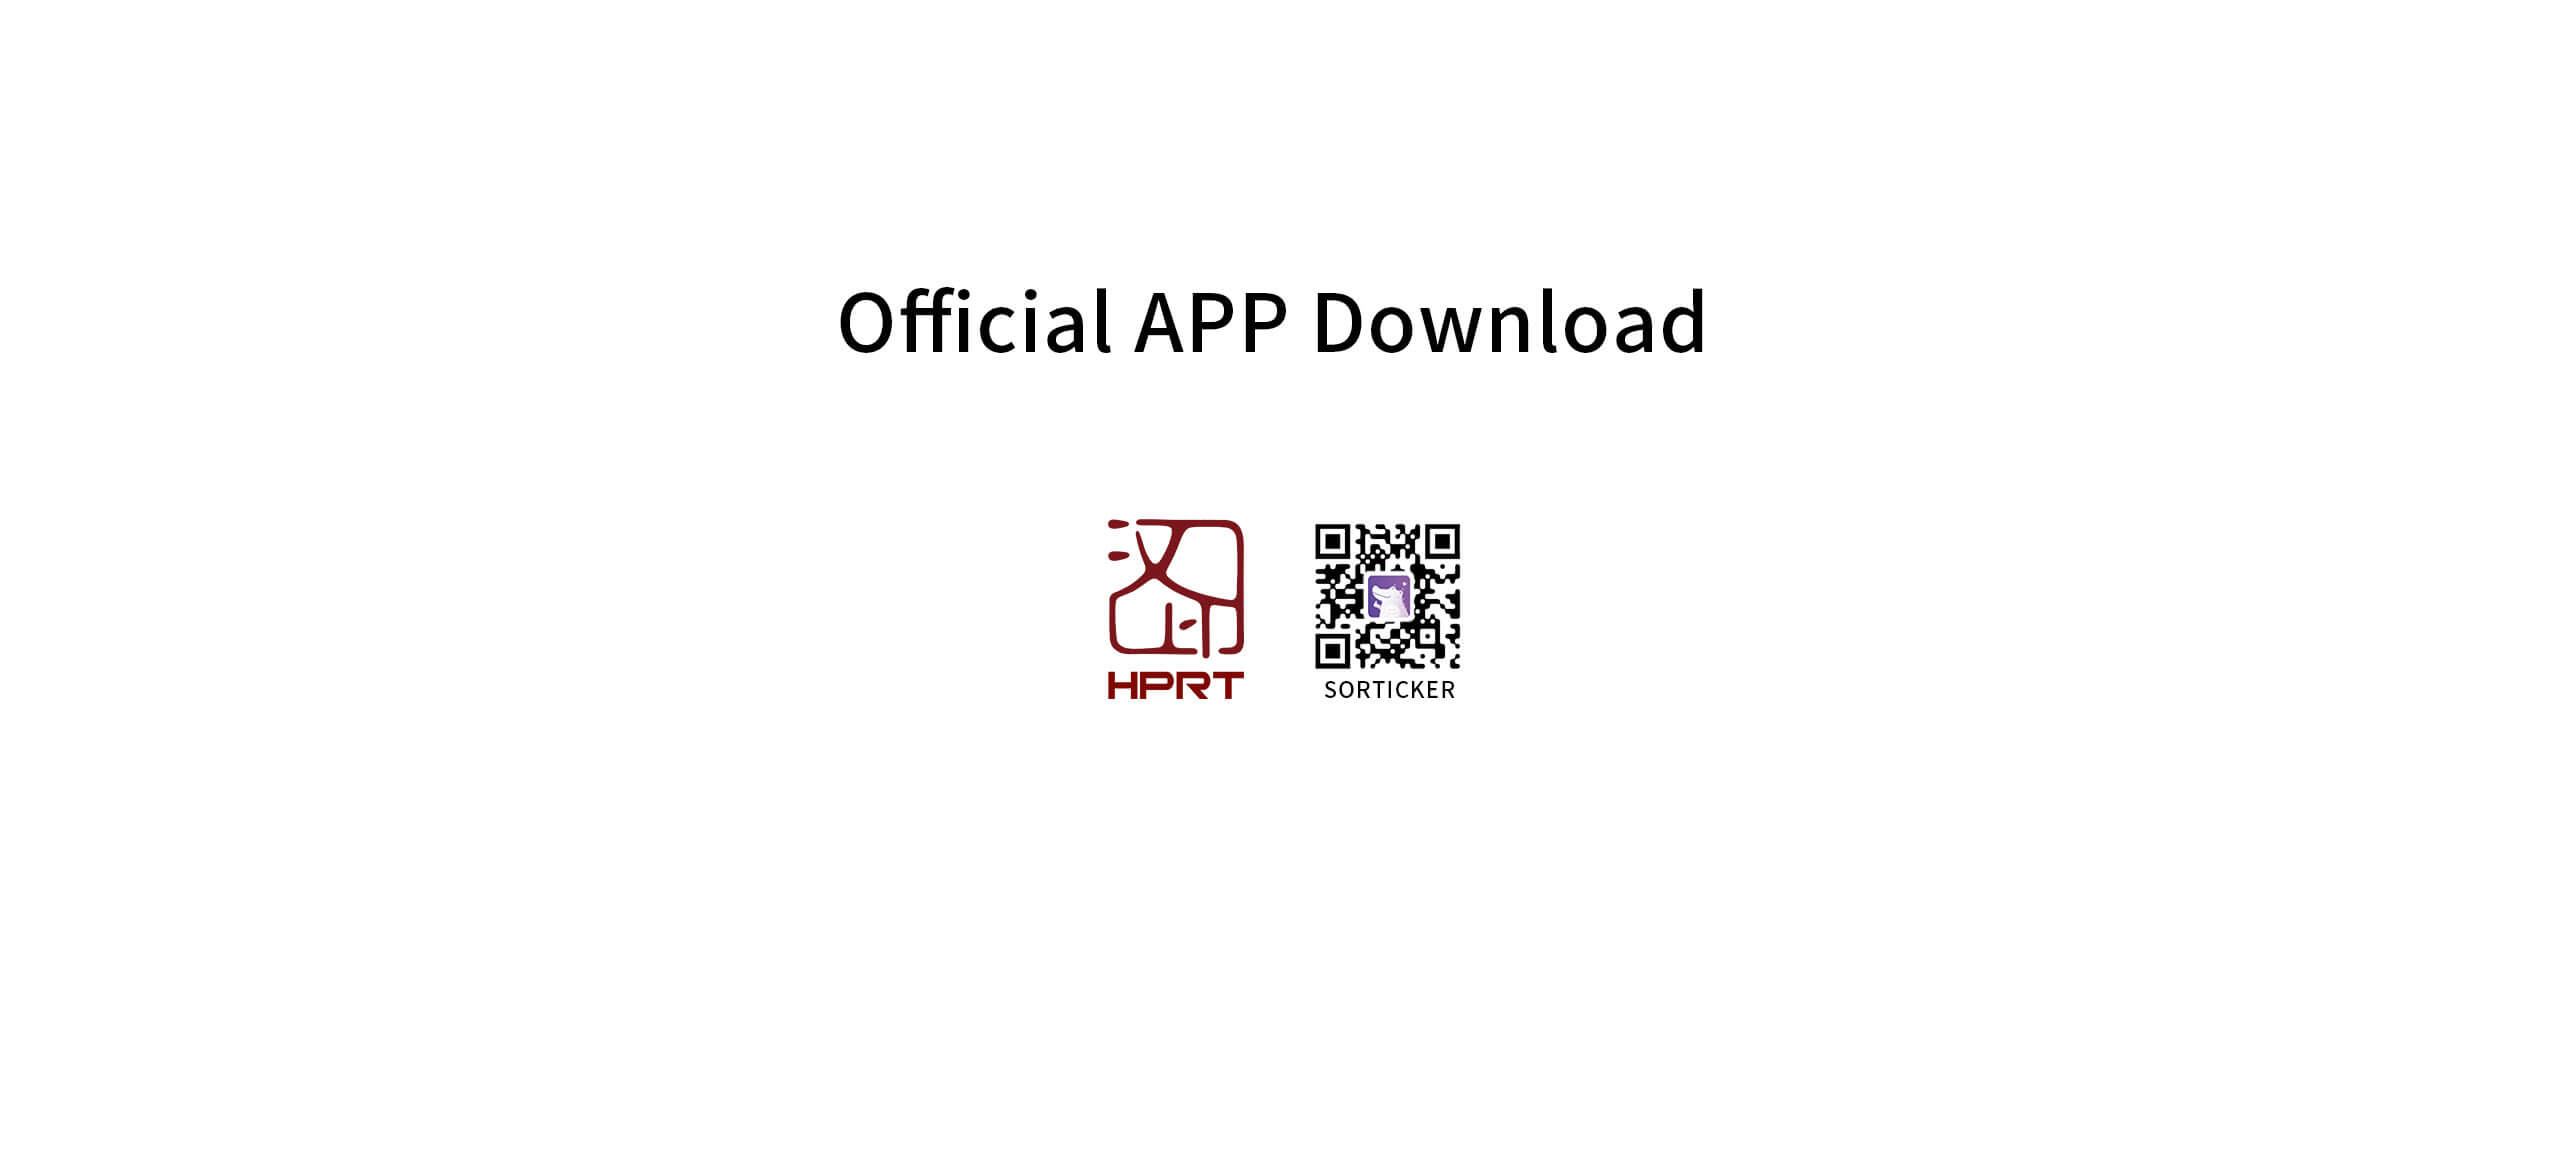 Official APP Download